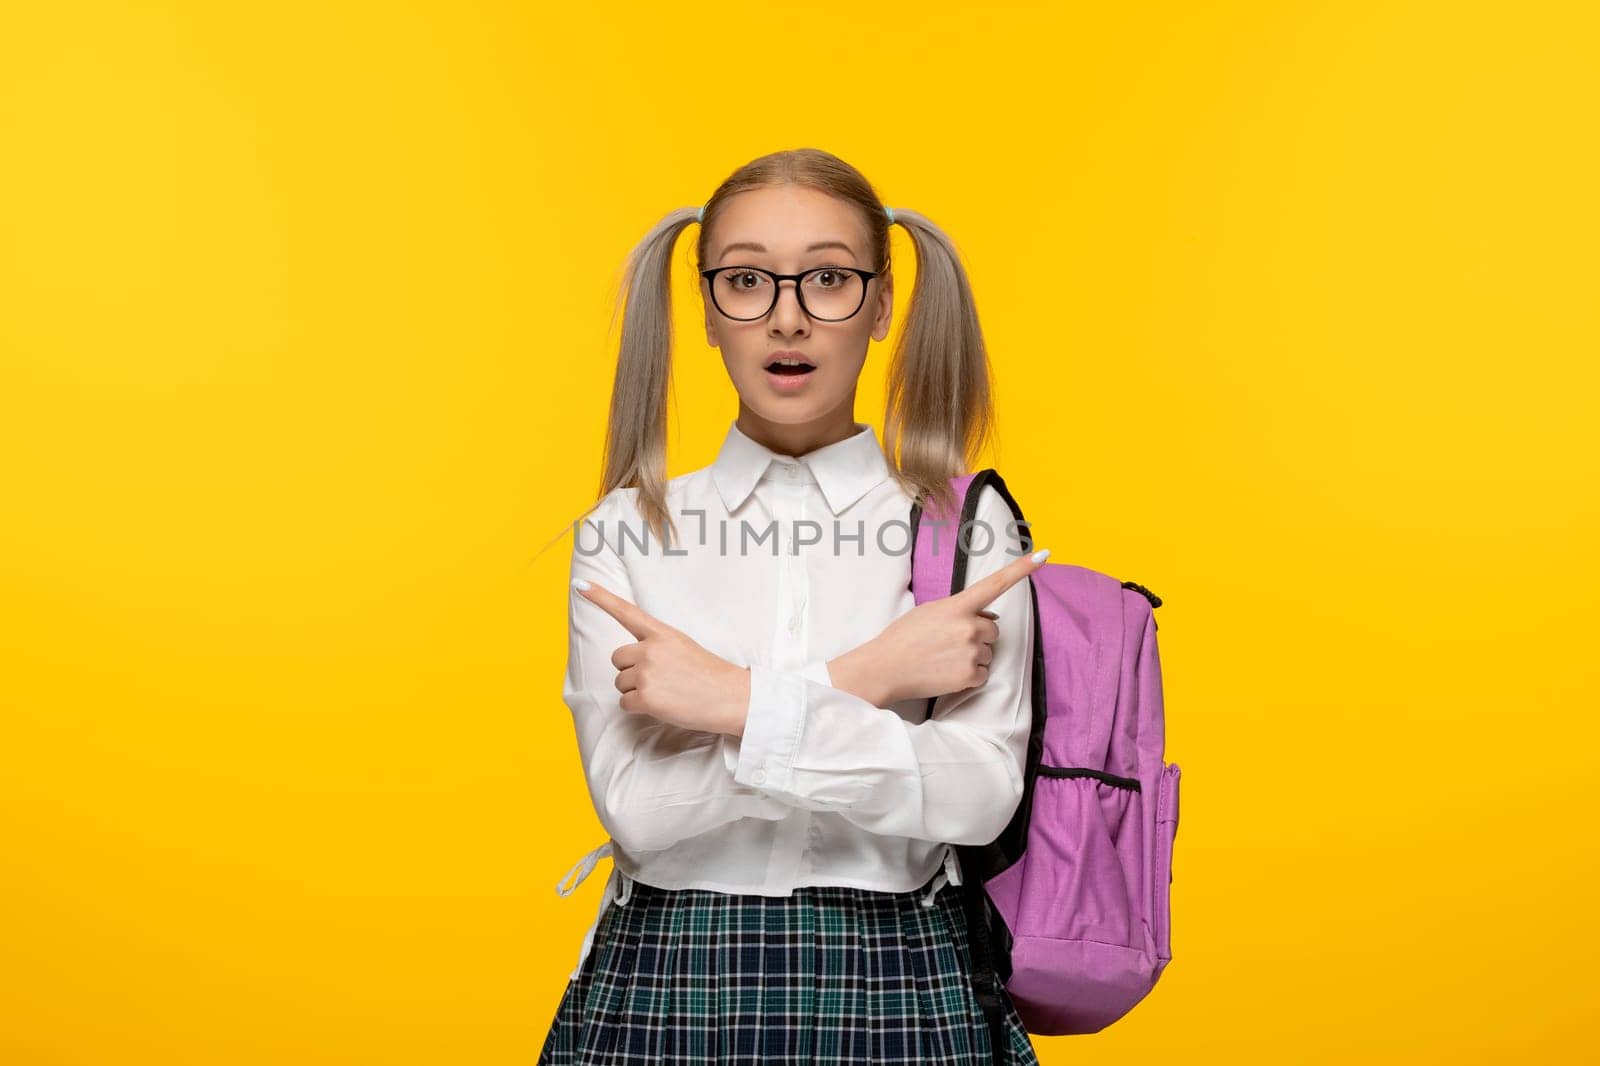 world book day blonde girl surprised in school uniform wearing glasses hands crossed